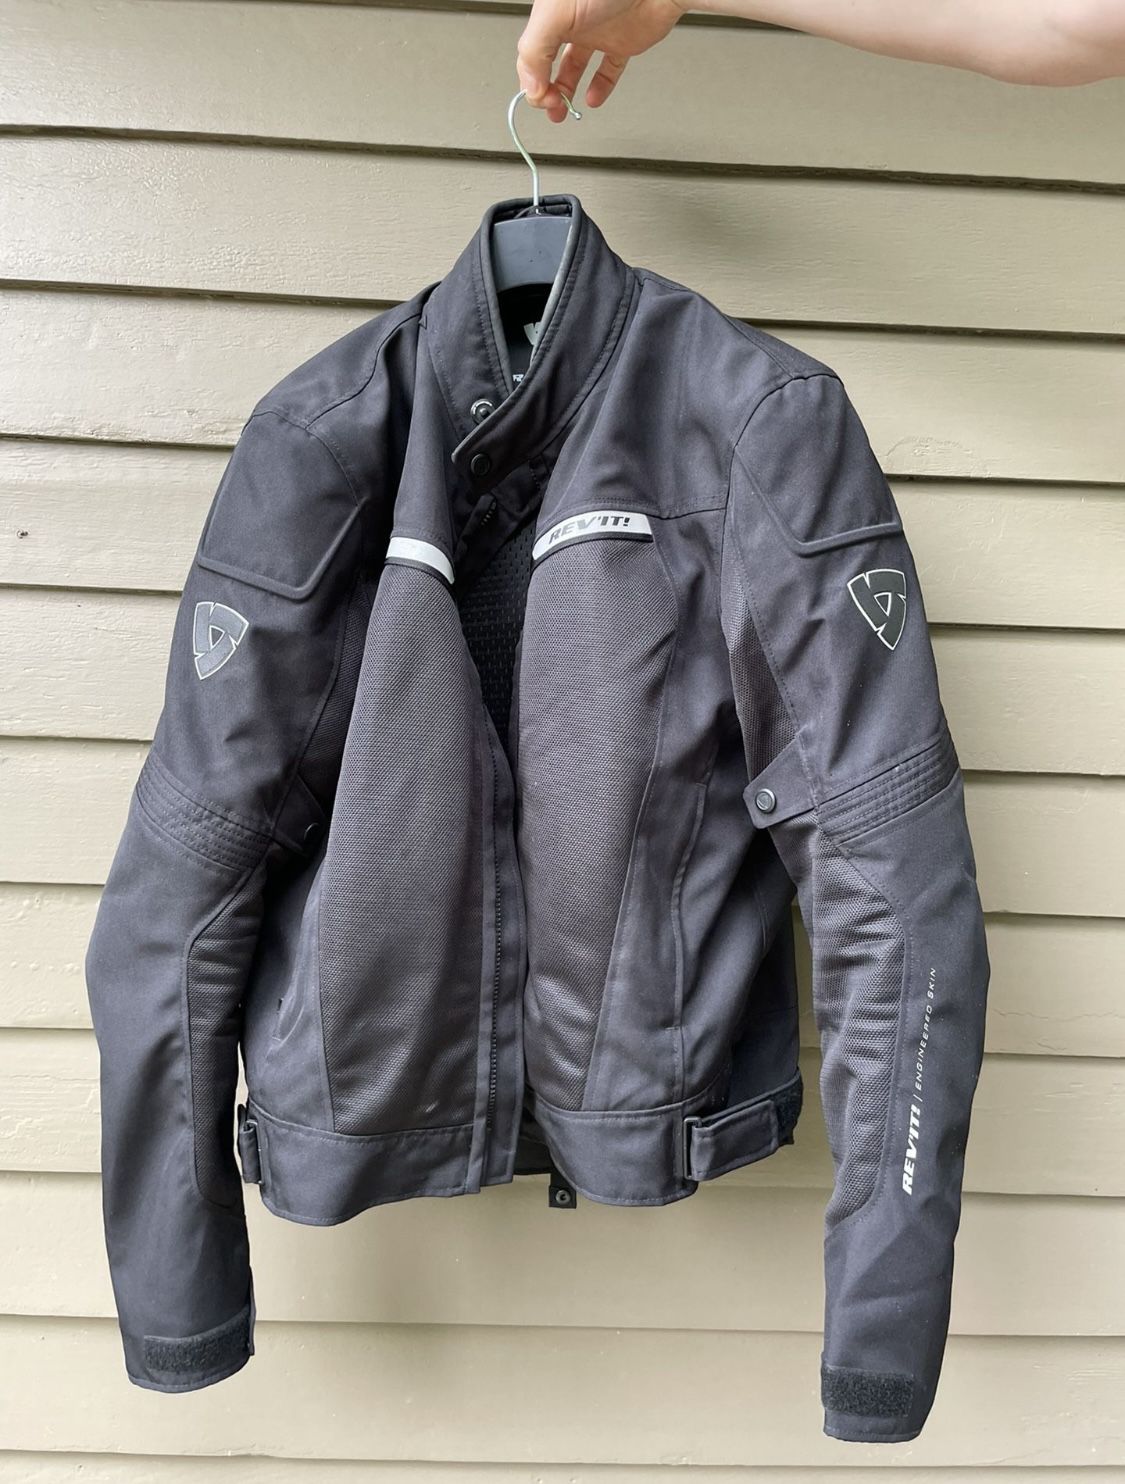 REV’IT Men’s Motorcycle jacket 